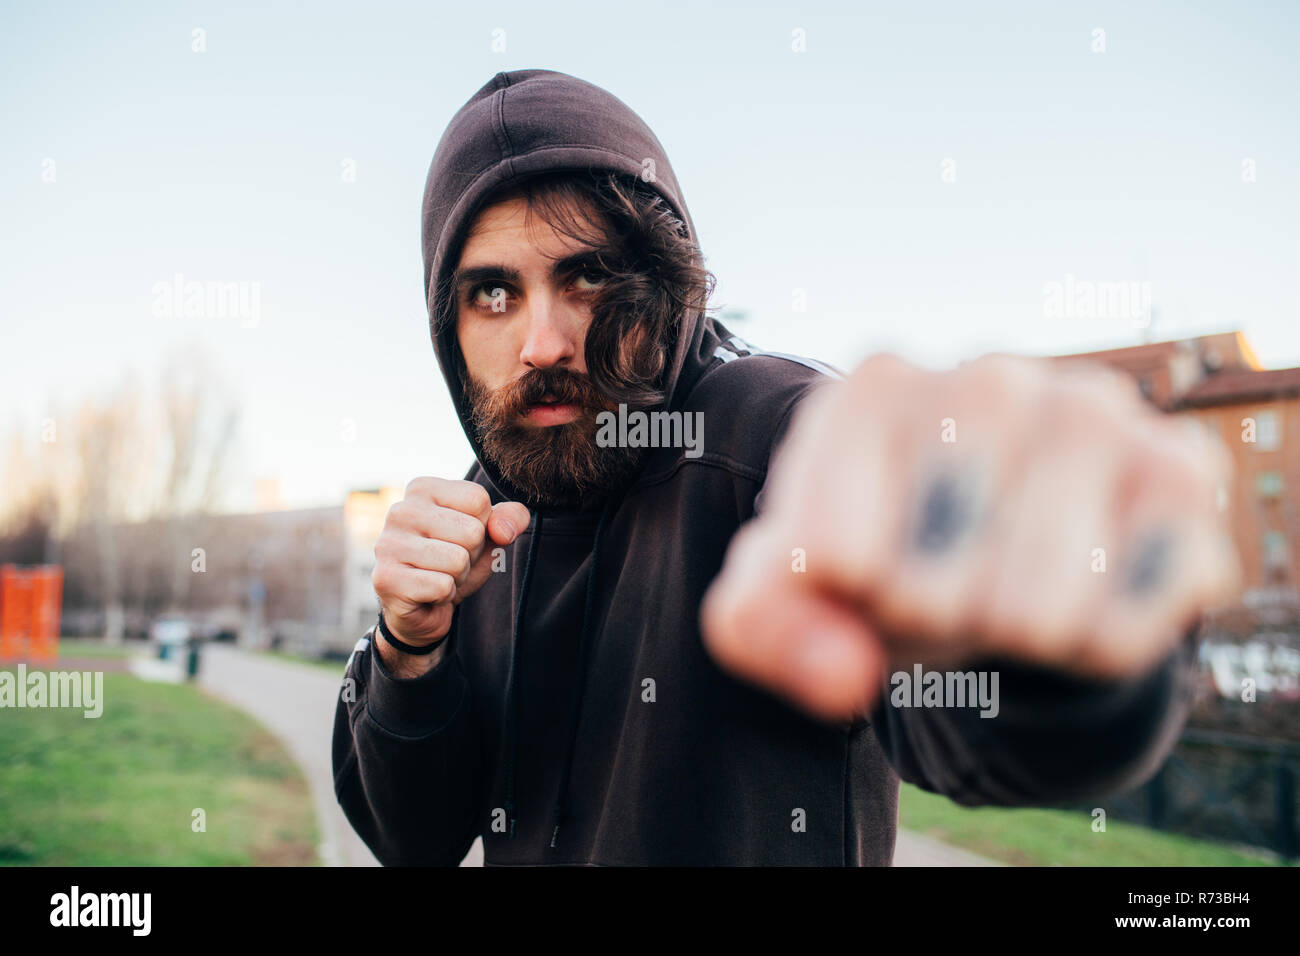 Man in hoodie in fighting pose Stock Photo